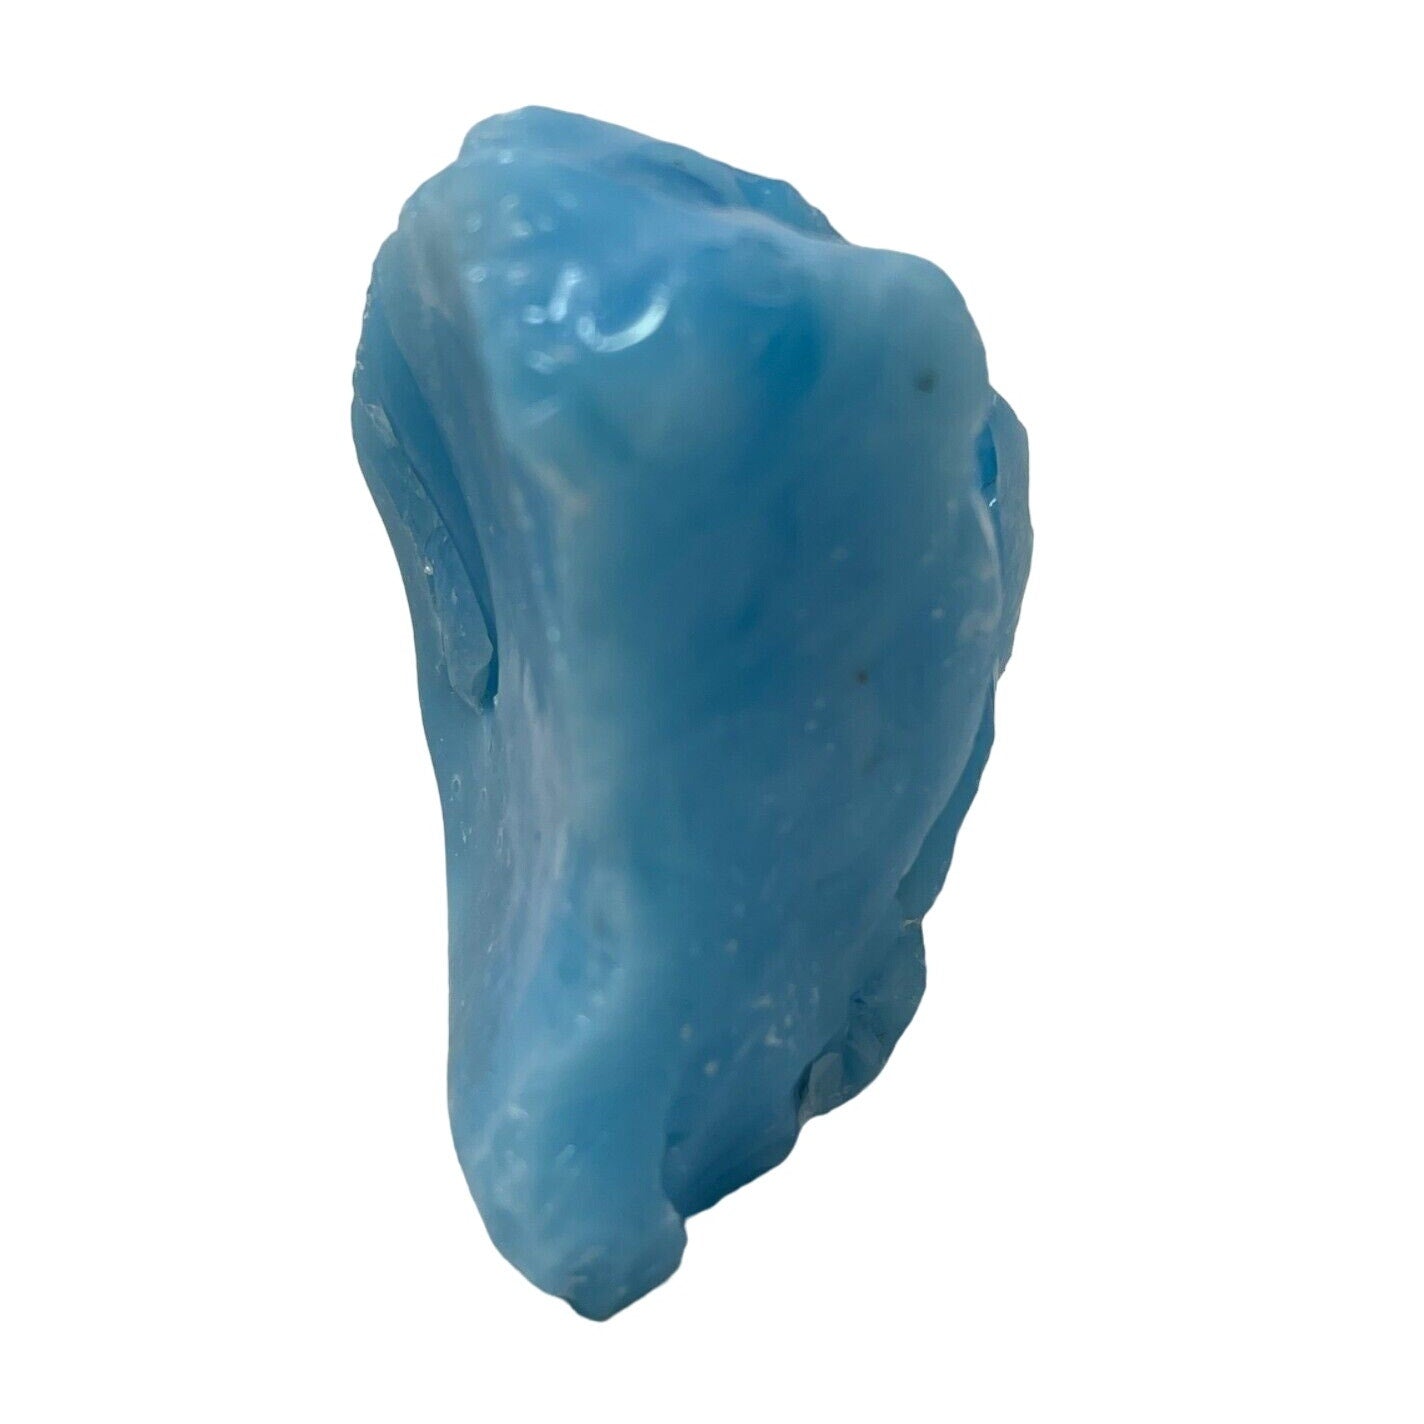 Satin Blue Manganese Multitone Glowing Slag Art Glass Cullet #GLLG23128